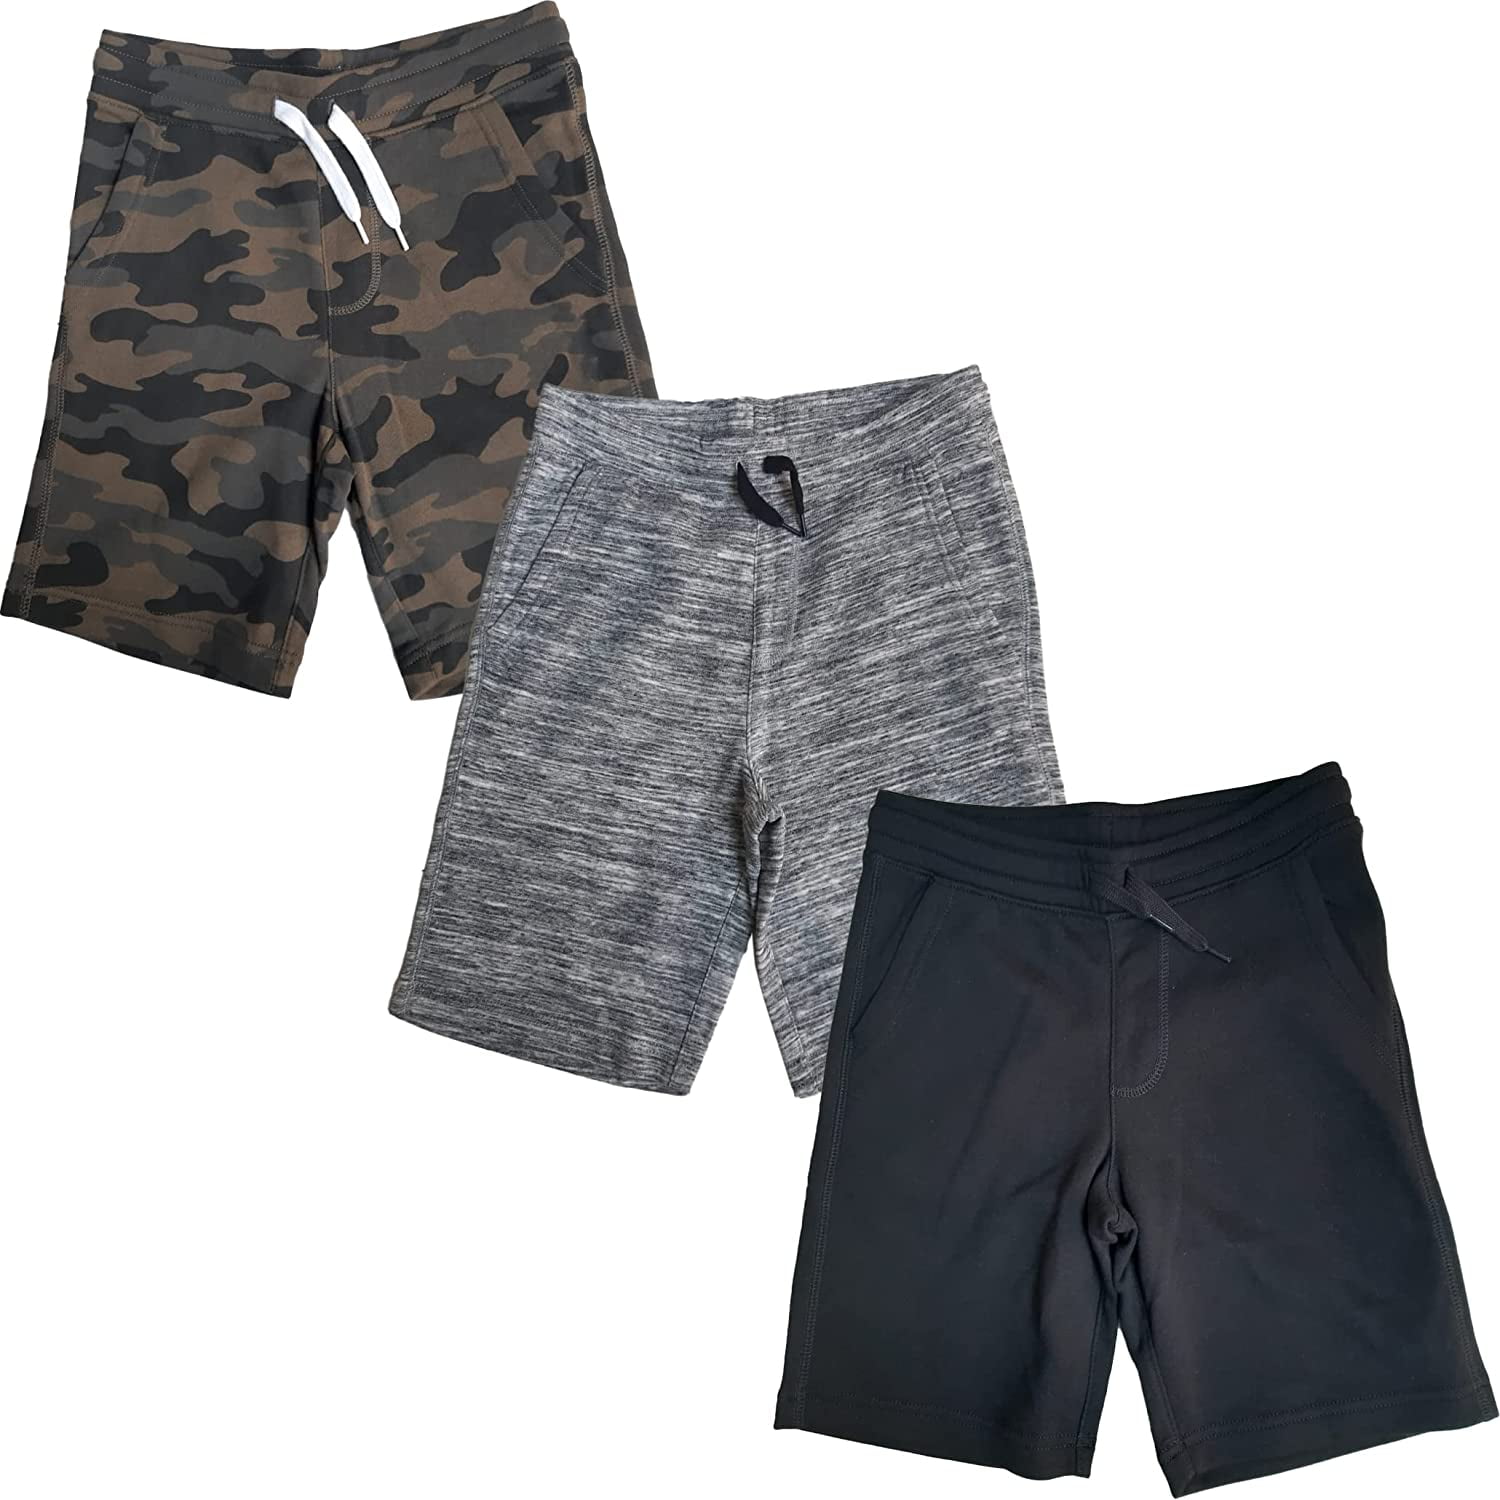 Andrew Scott Boys 3 Pack Fleece Shorts (Grab Bag Assorted Colors)